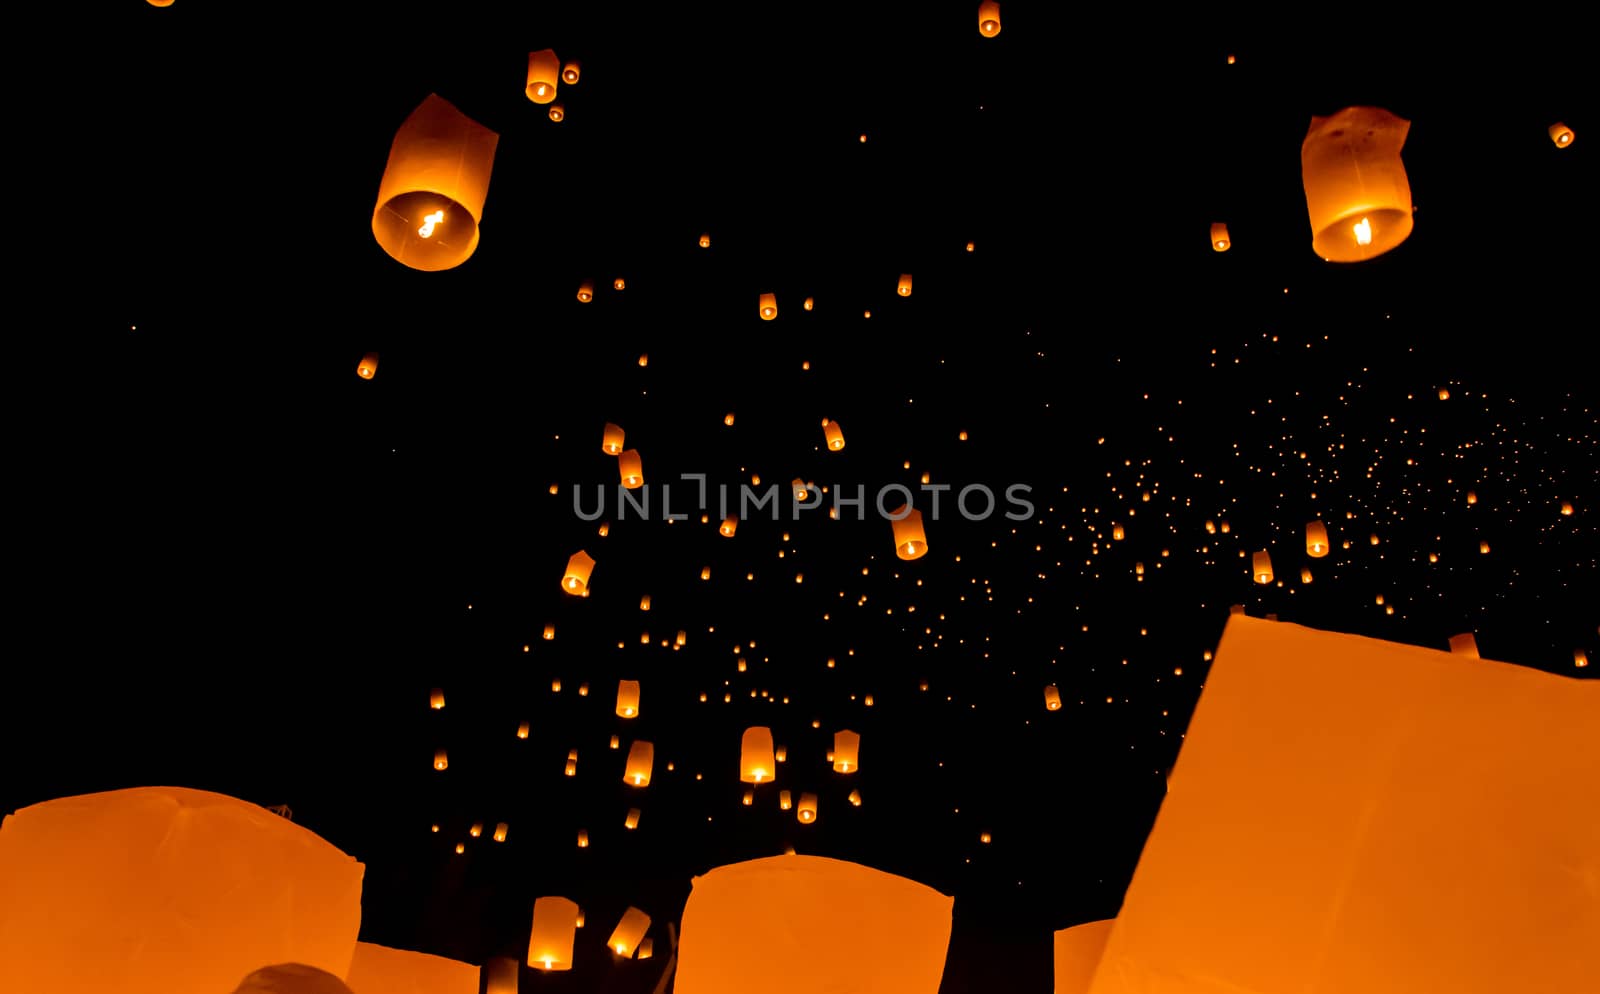 Floating lantern, Yi Peng Balloon Festival in Chiangmai, Thailand